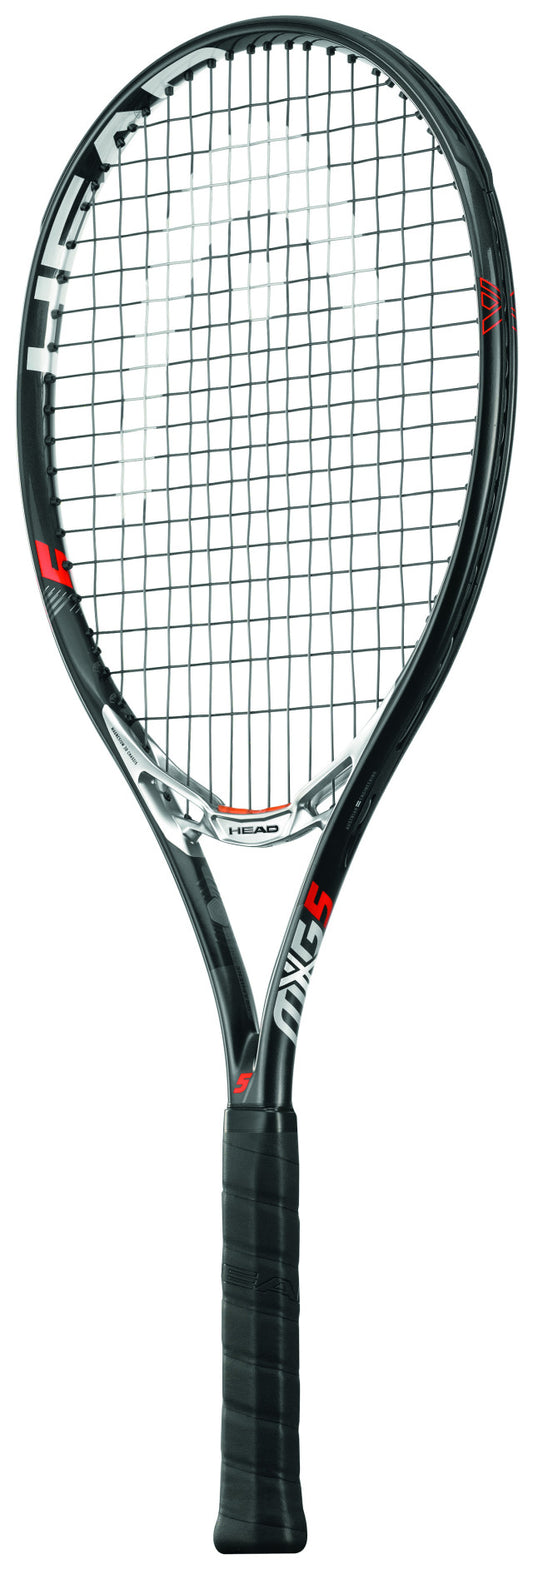 Head Unisex Tennis 238717 Mxg 5 Racquet